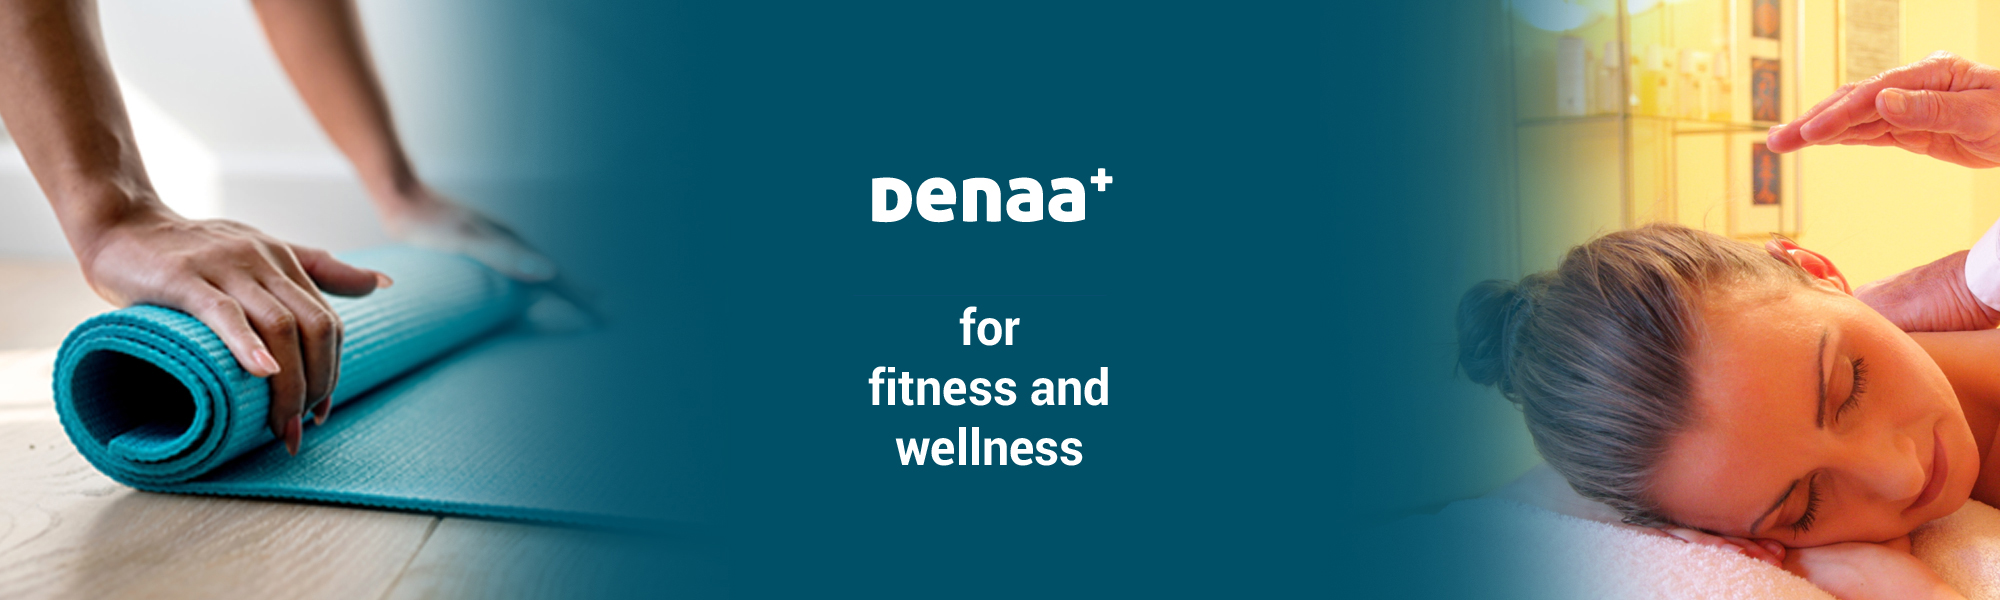 DENAA+ DENAA+ for fitness and wellness